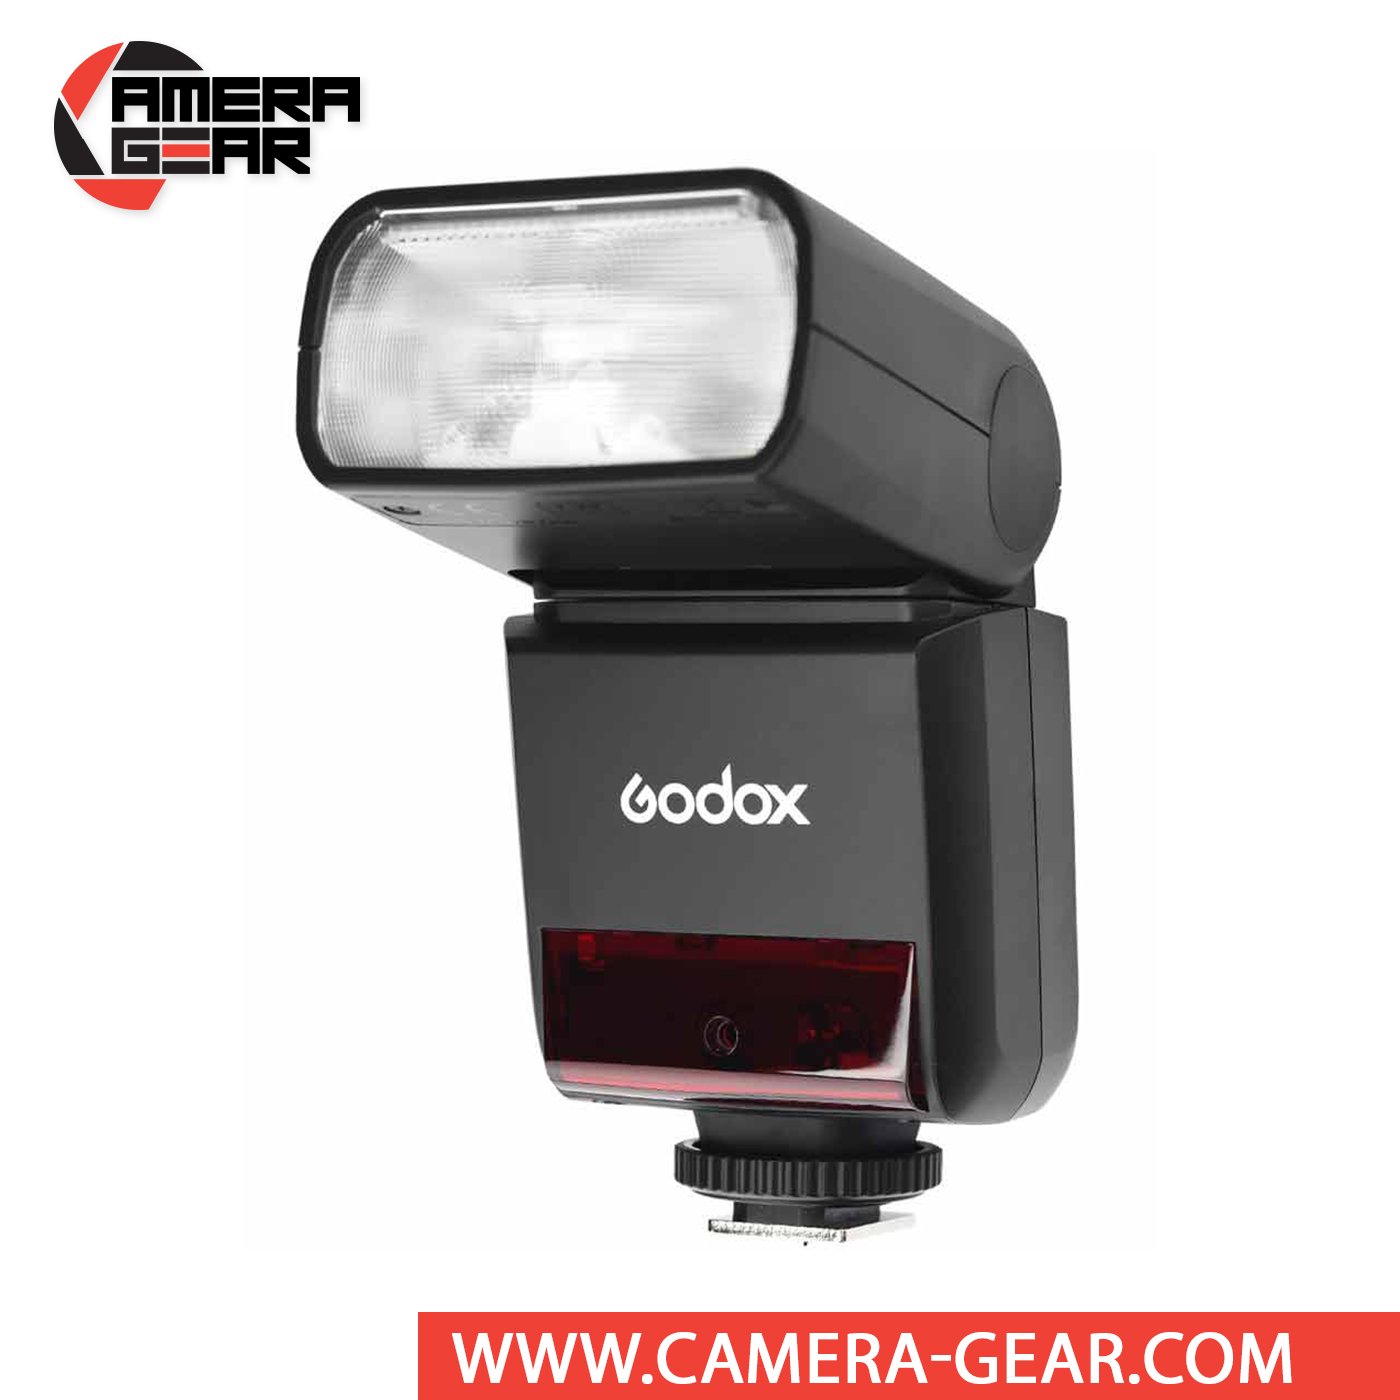 Godox TT600 Camera Flash for Canon, Nikon, Olympus, and Pentax Cameras –  Godox Official Market - Professional Photography Equipment